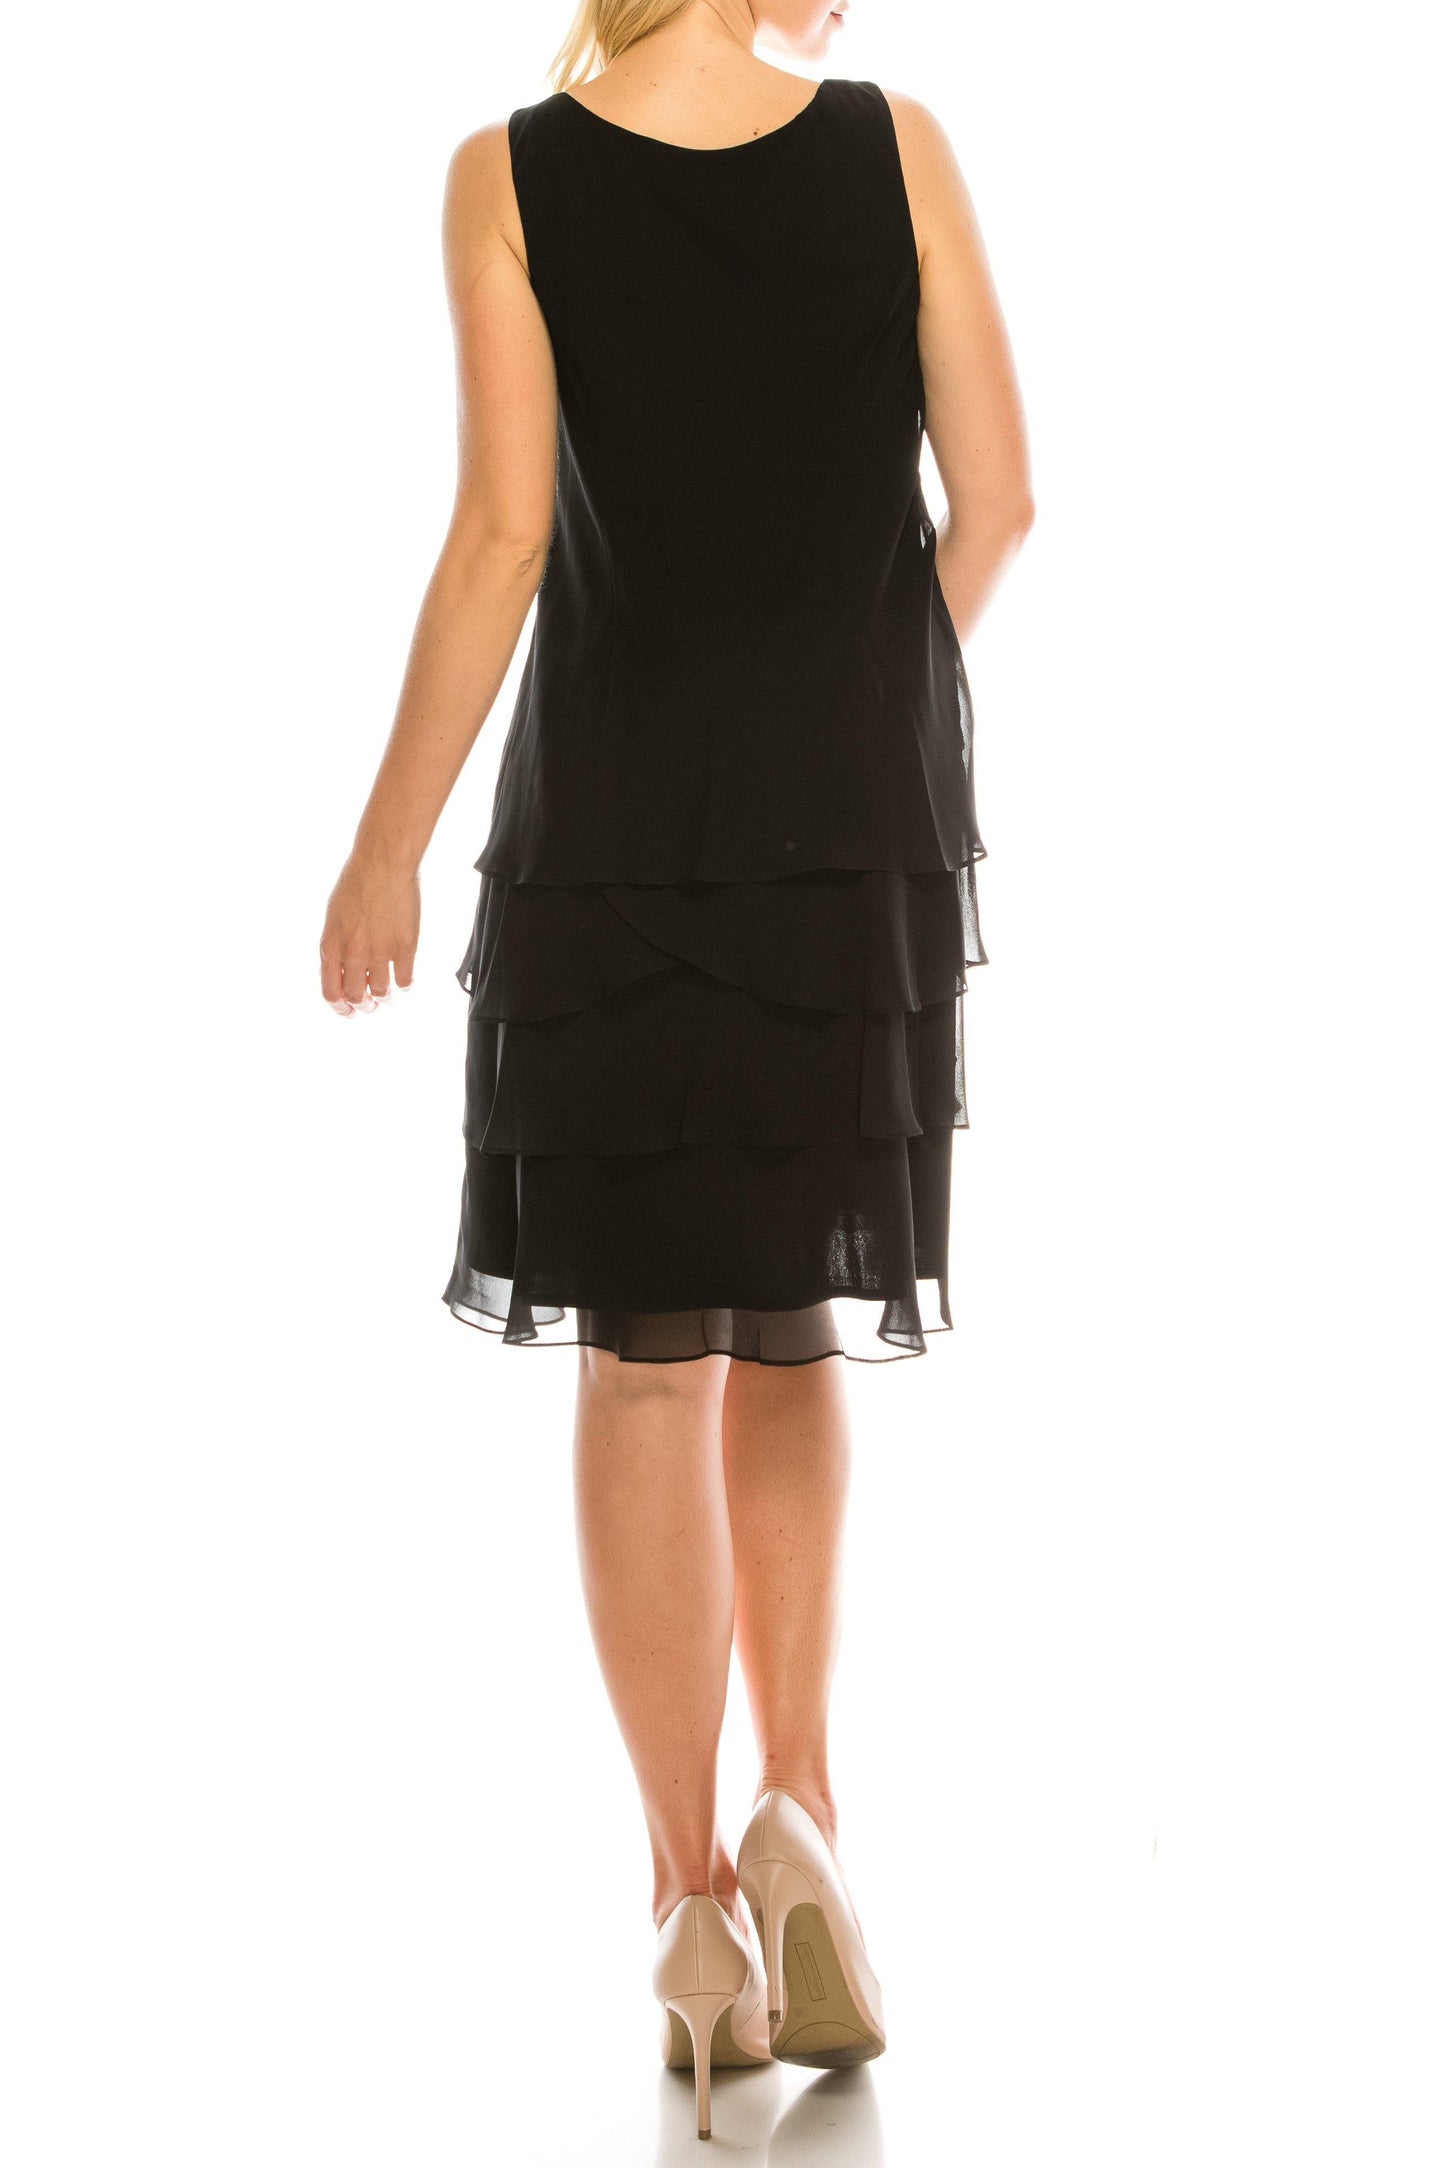 SLNY Short Plus Size Evening Jacket Dress - The Dress Outlet